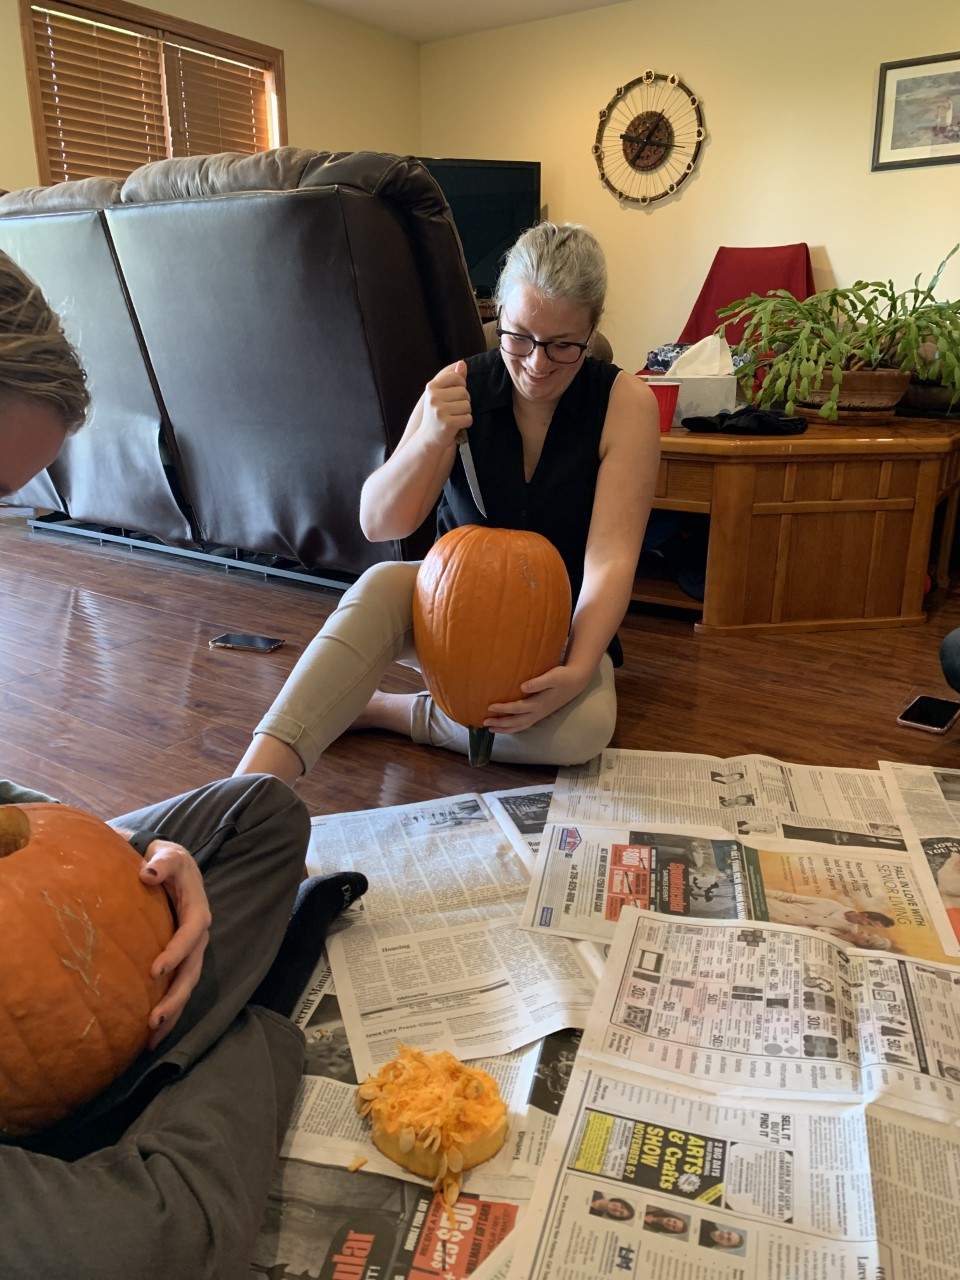 Renee starting to carve her pumpkin